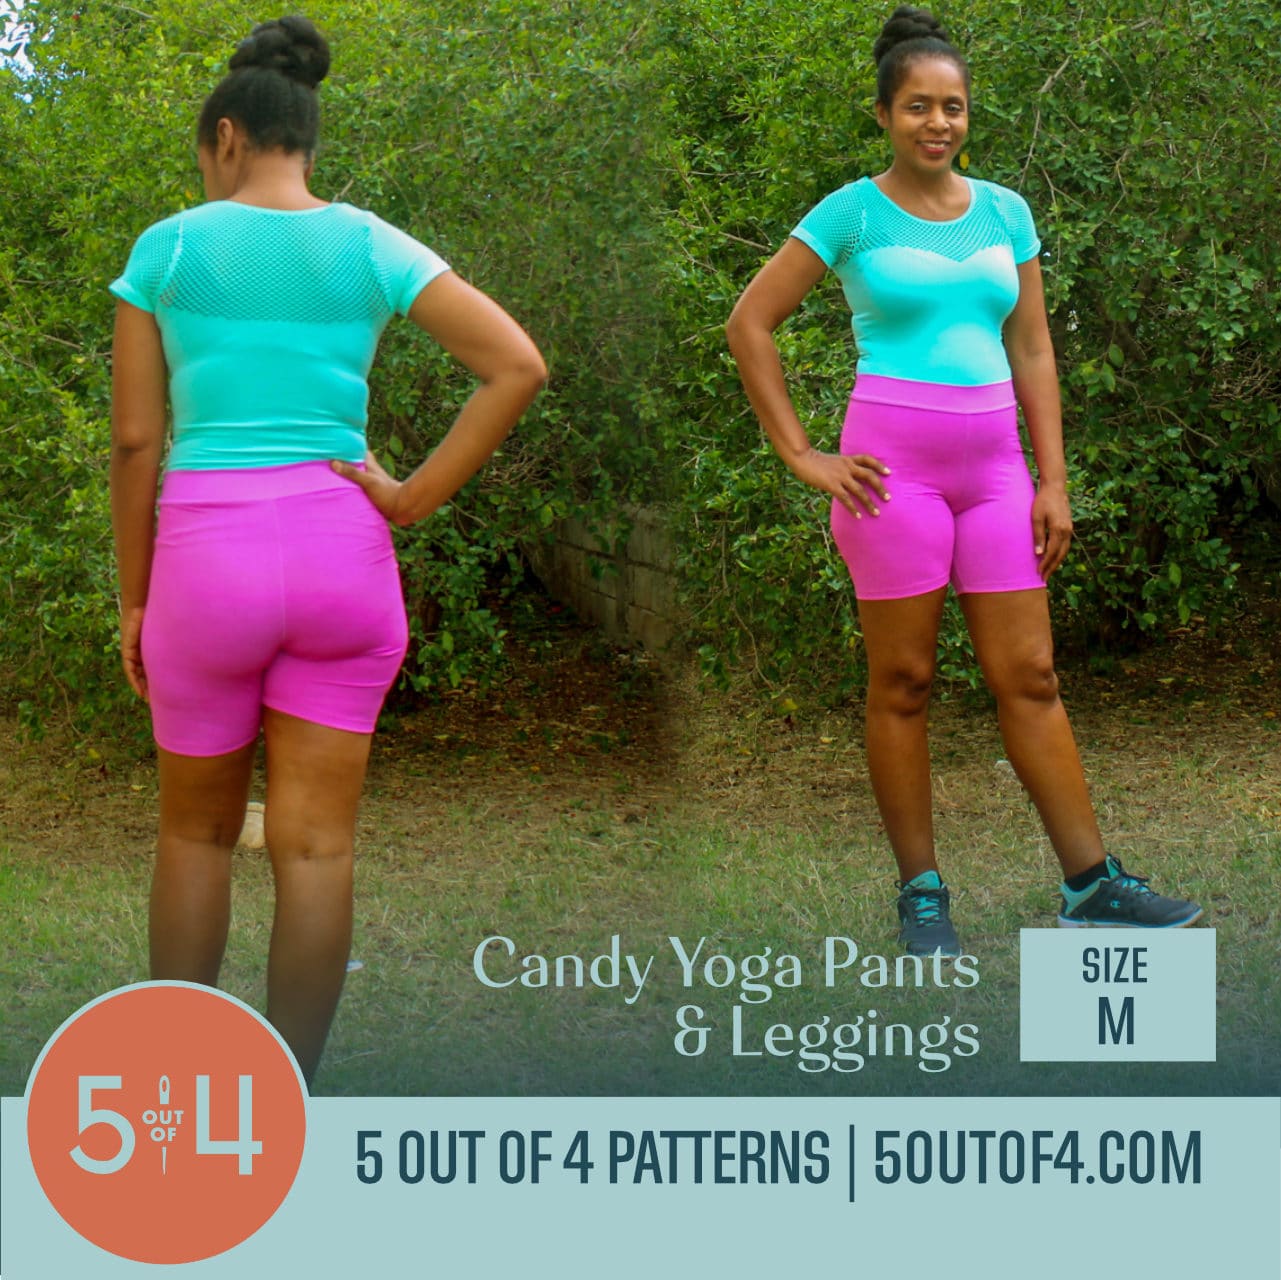 Candy Yoga Pants and Leggings